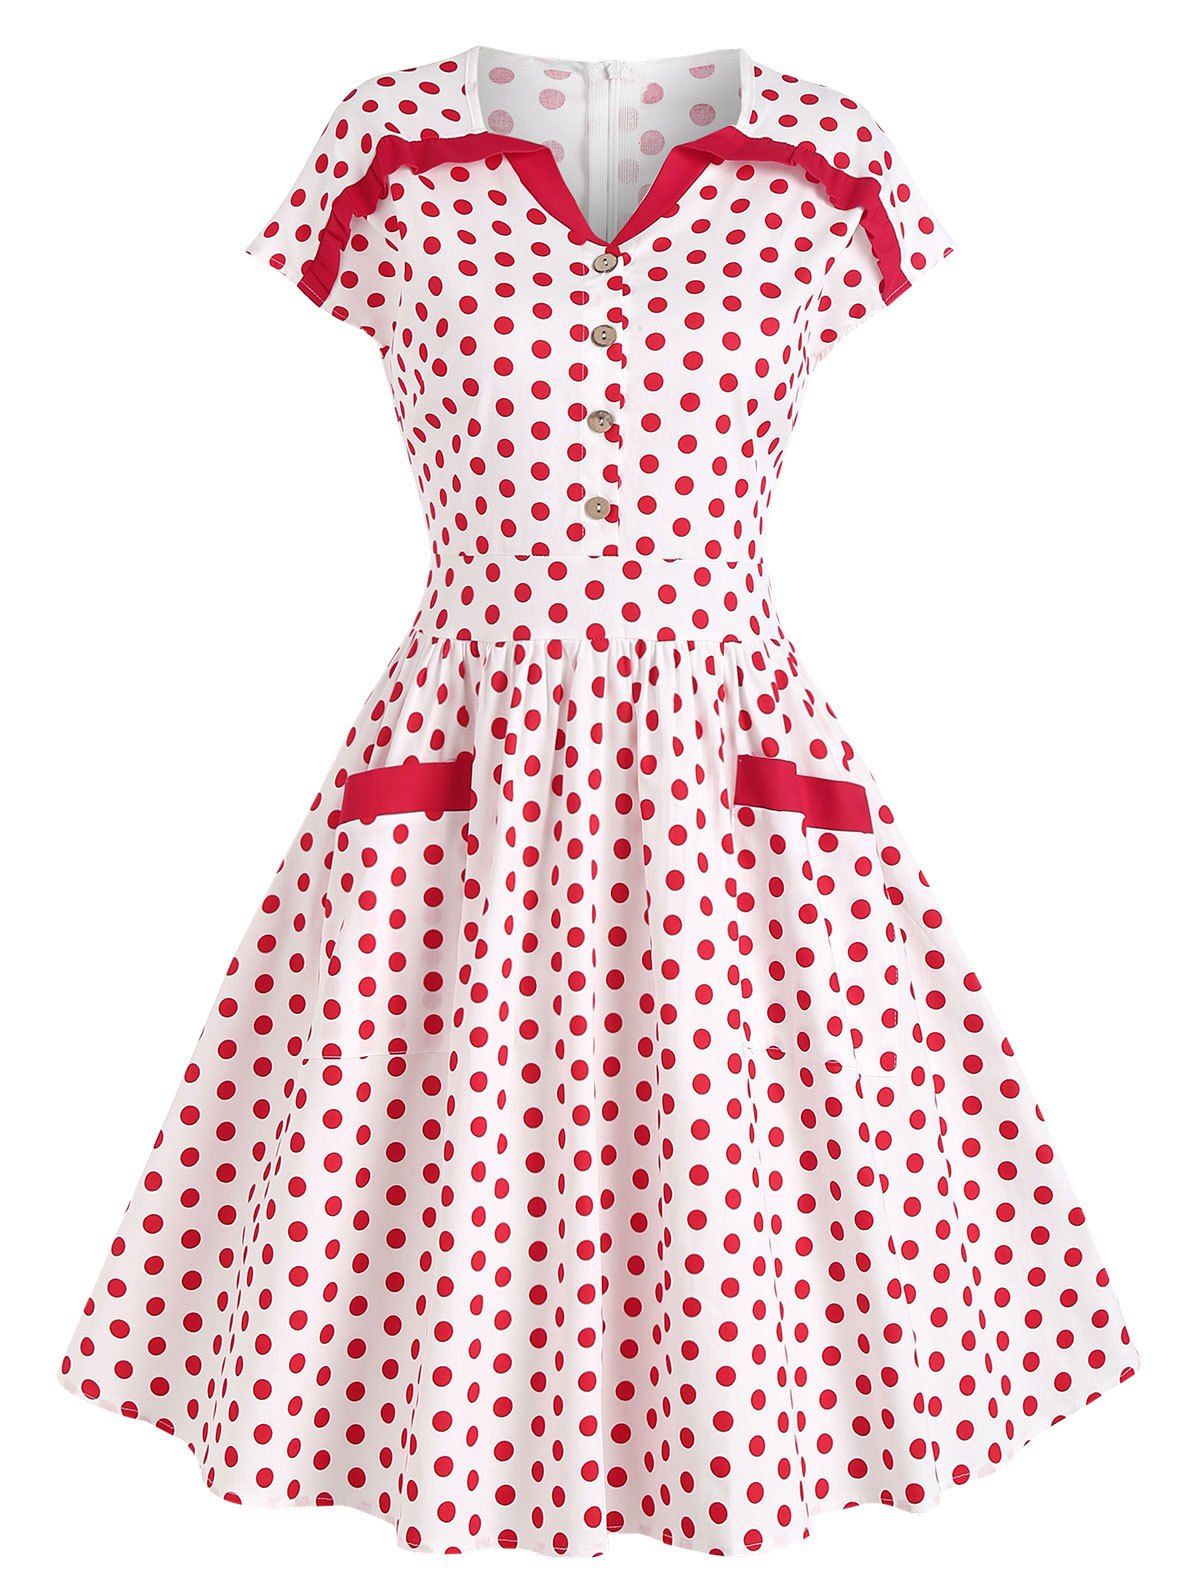 Polka Dots Print Vintage Dress Button Pockets Frilled A Line Dress Notched Collar Flare Dress - RED M